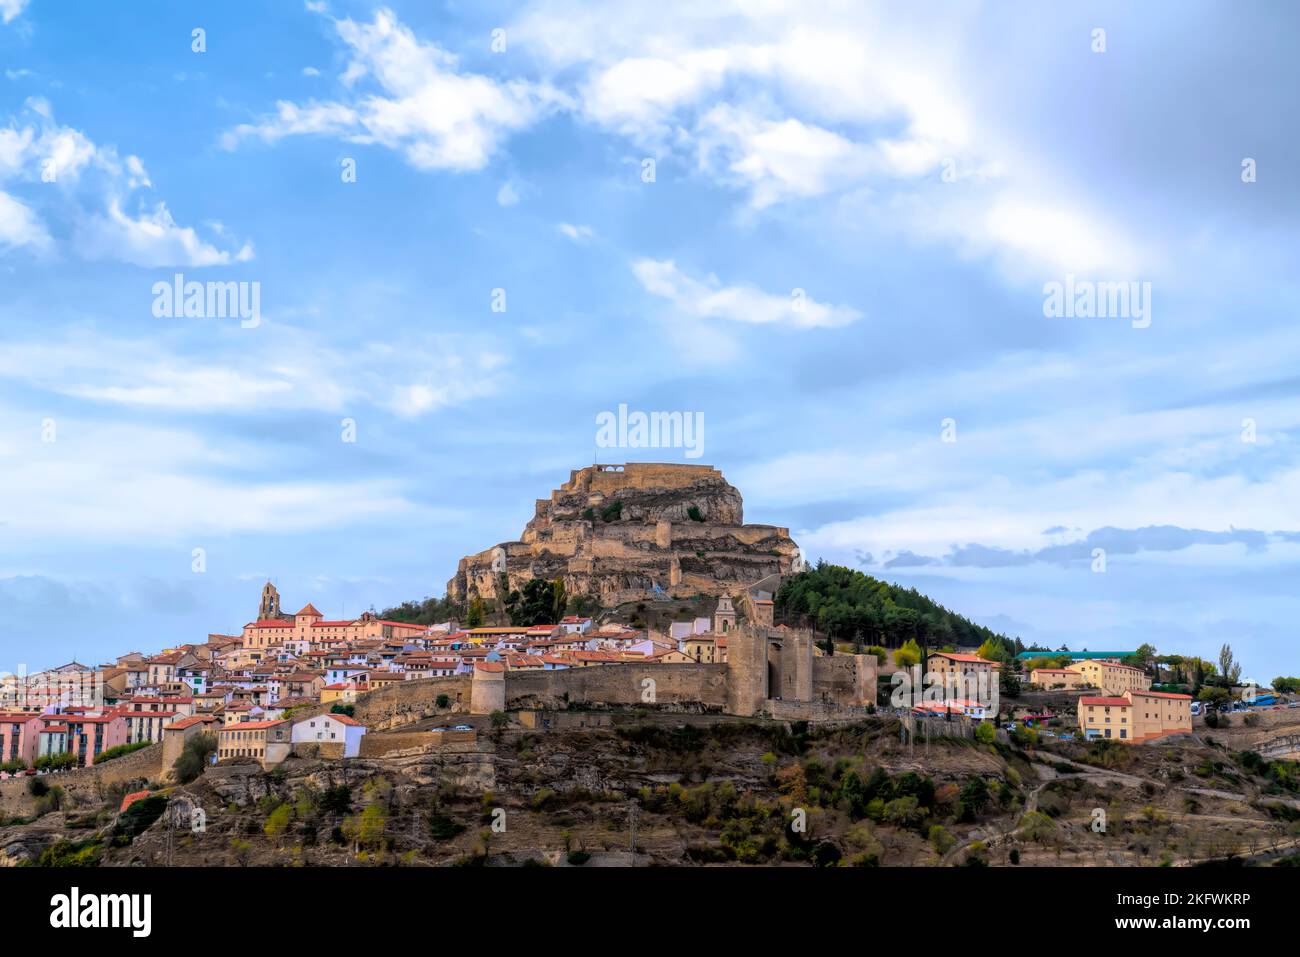 Morella castle on hilltop medieval building Castellon province Spain Stock Photo